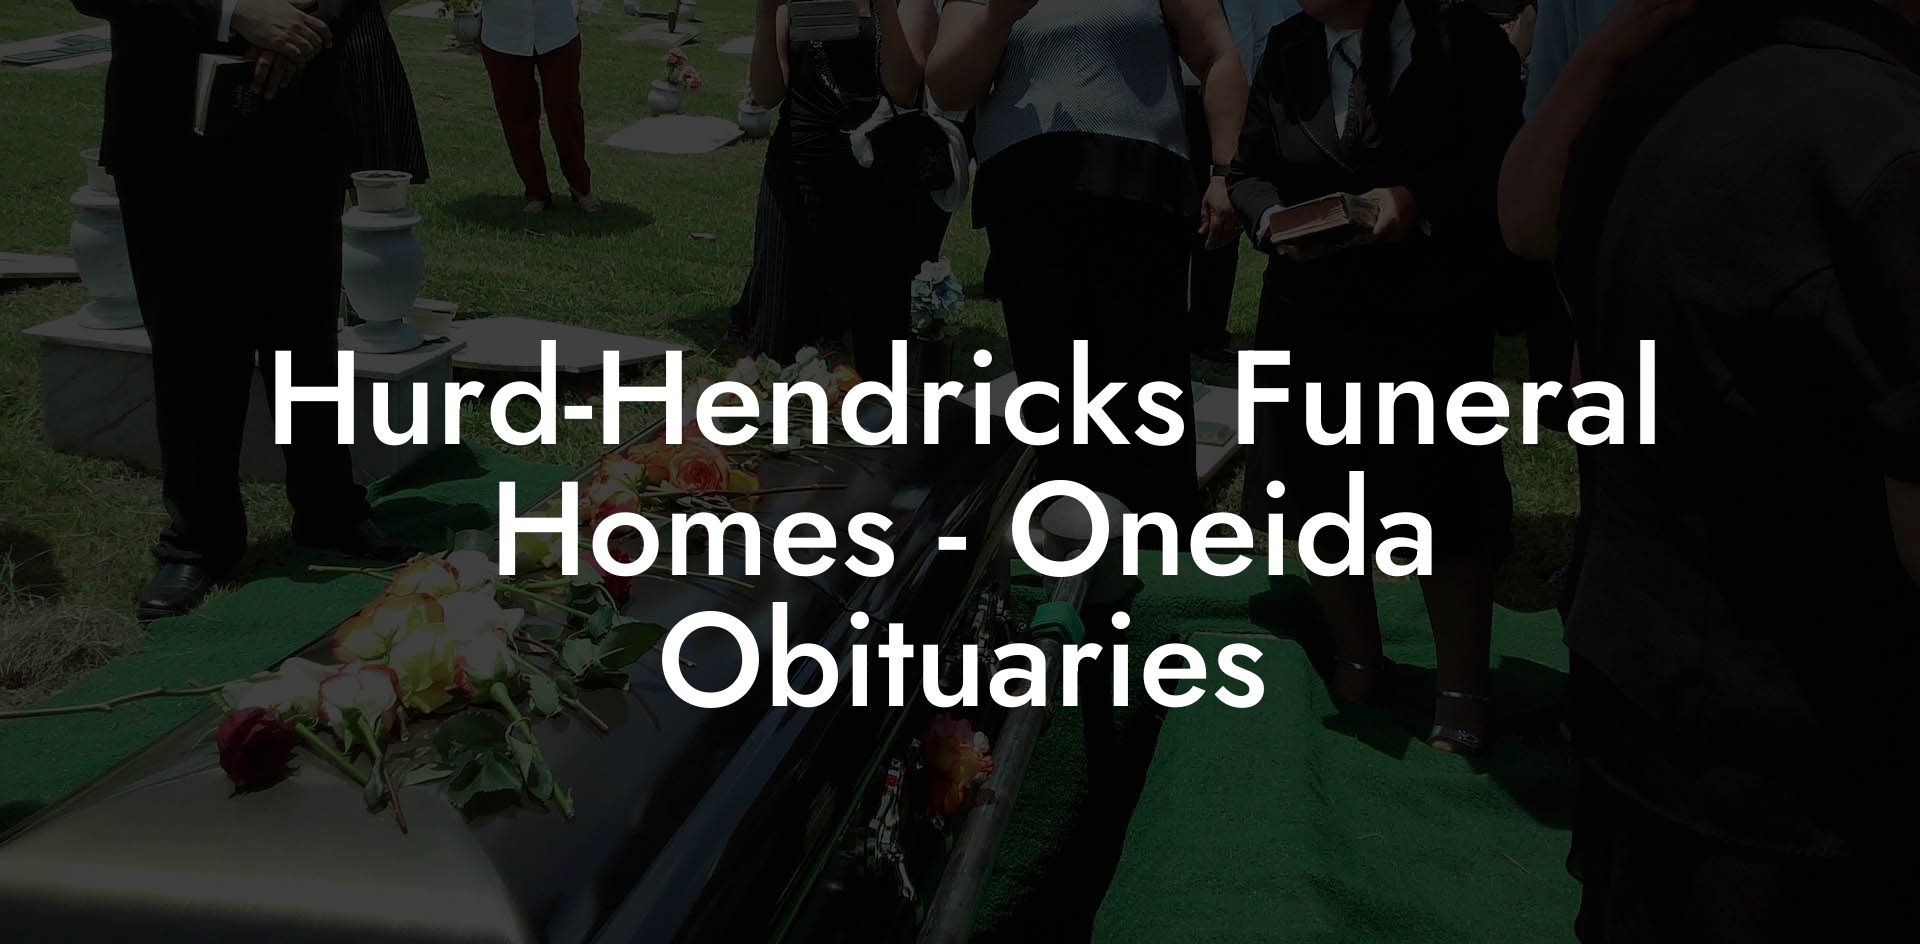 Hurd-Hendricks Funeral Homes - Oneida Obituaries